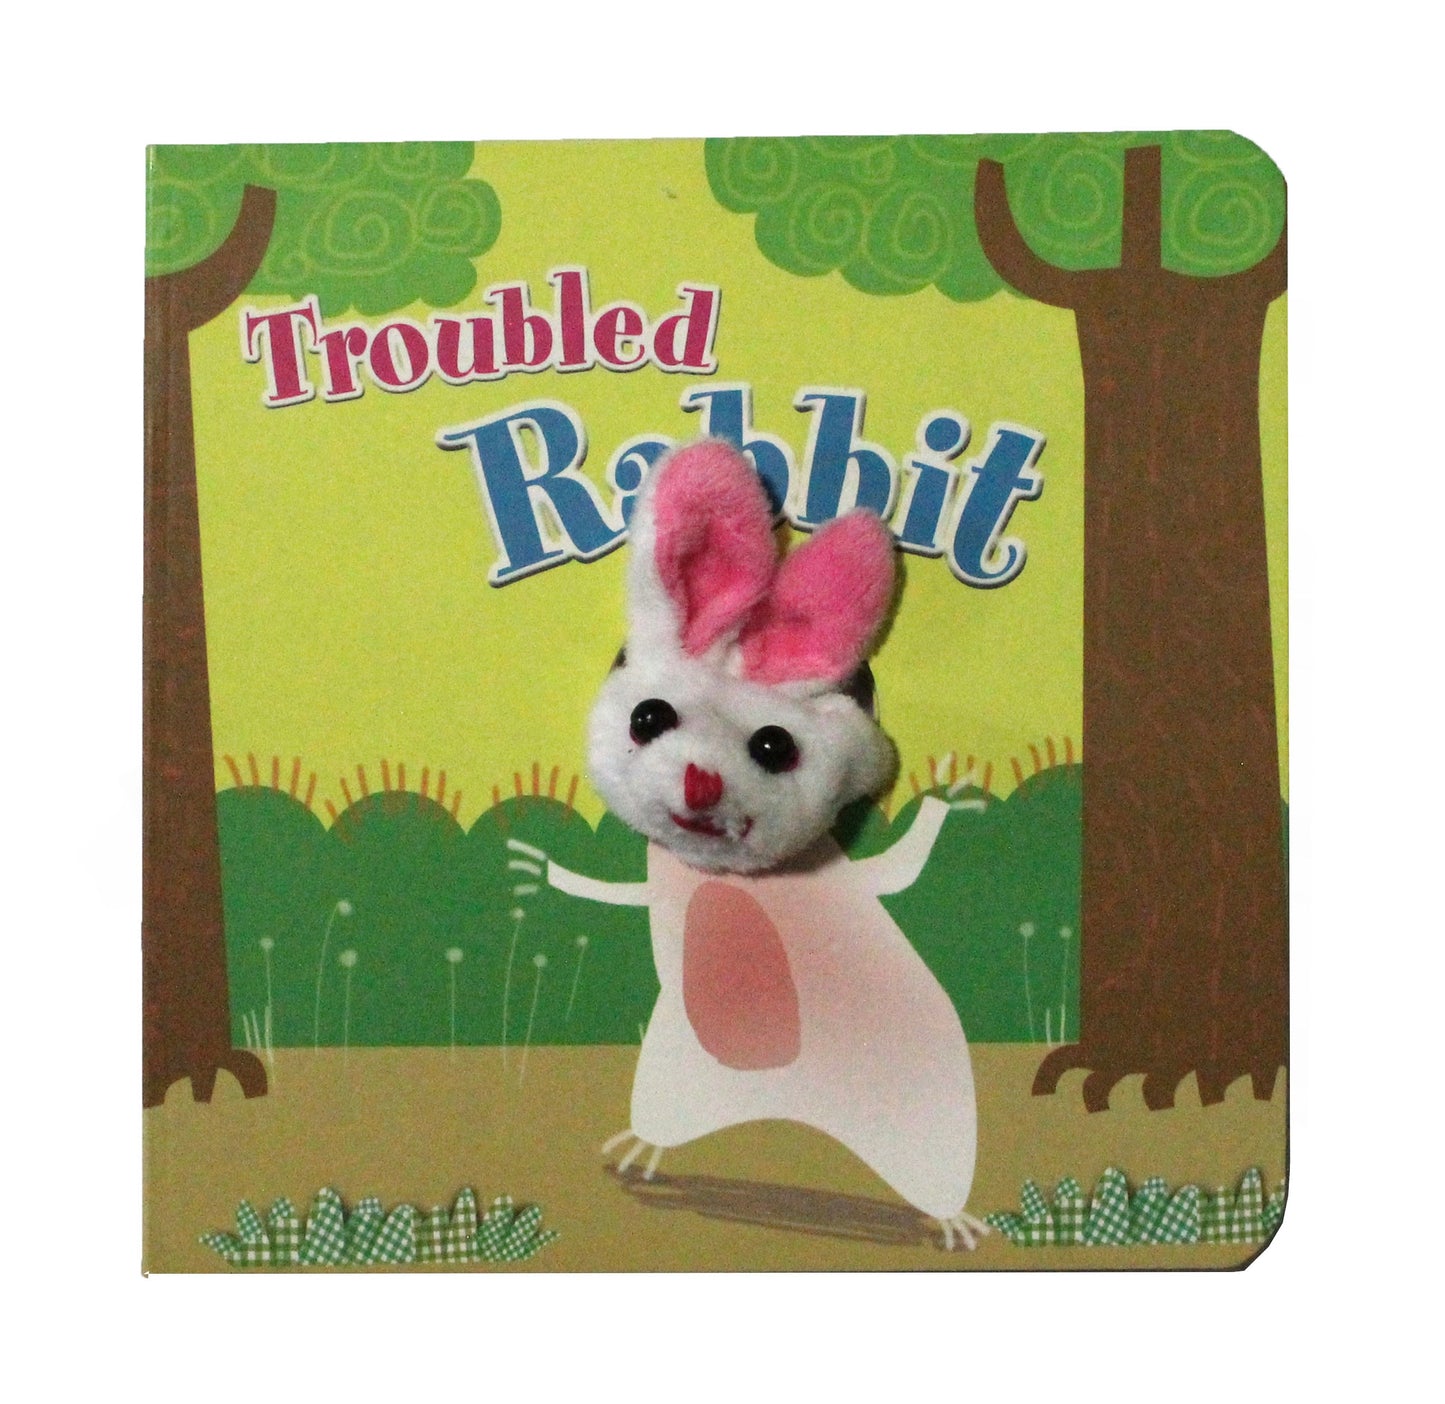 Finger Puppet Books - Troubled Rabbit